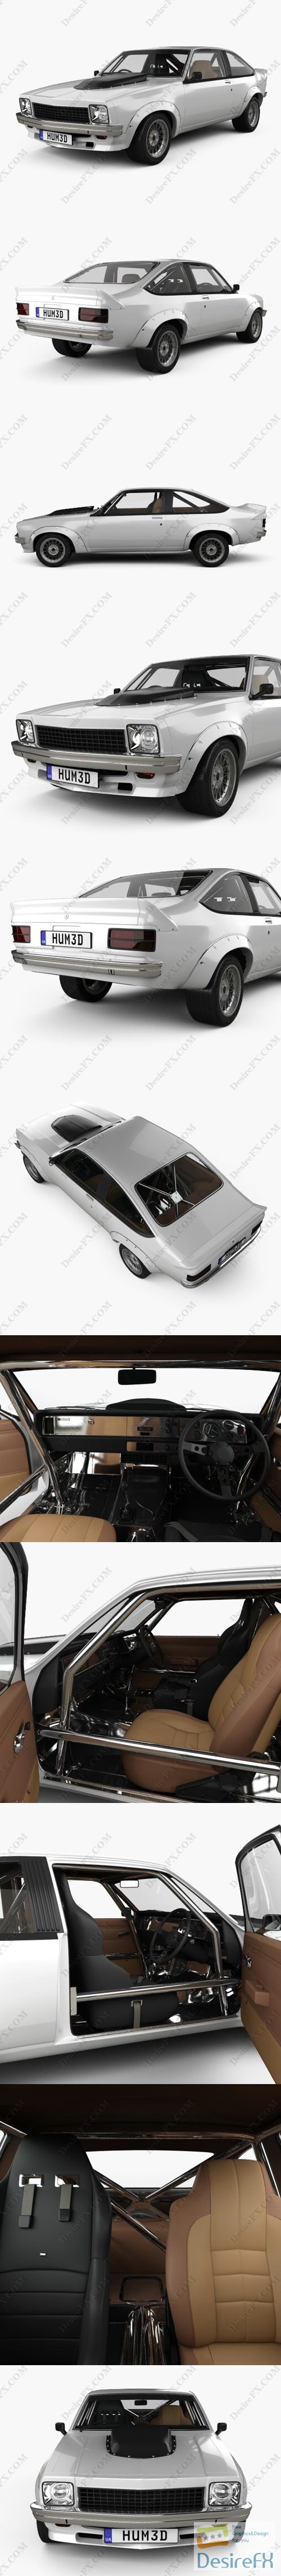 Holden Torana A9X Race with HQ interior 1979 3D Model